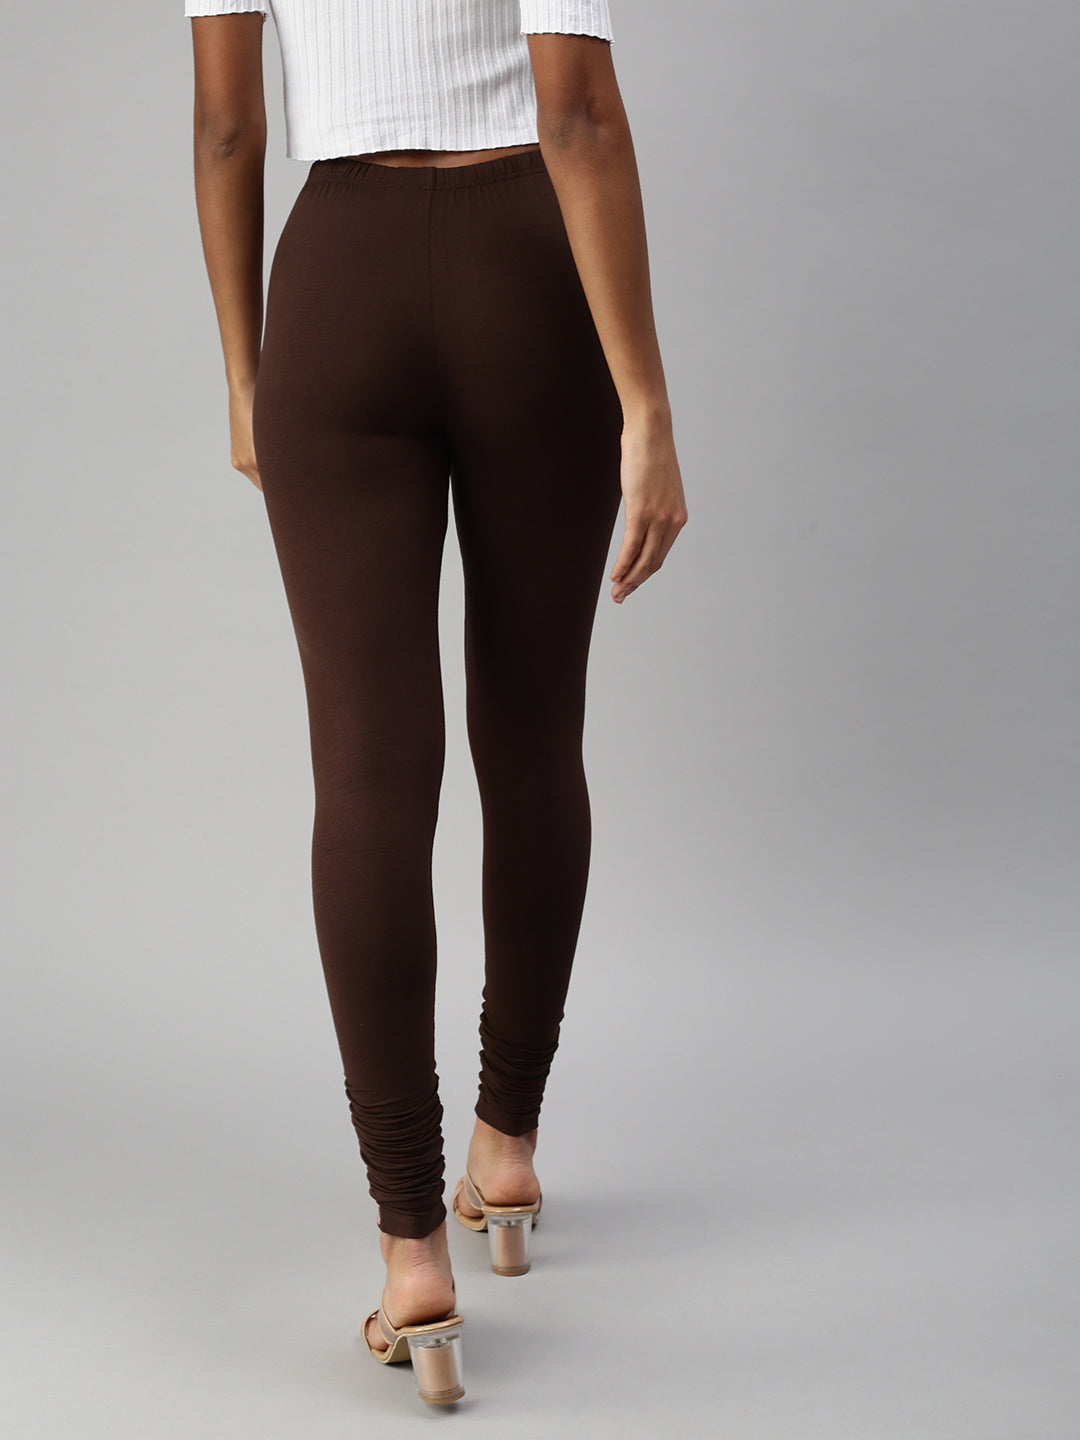 Buy Brown Leggings for Women by Plus Size Online | Ajio.com